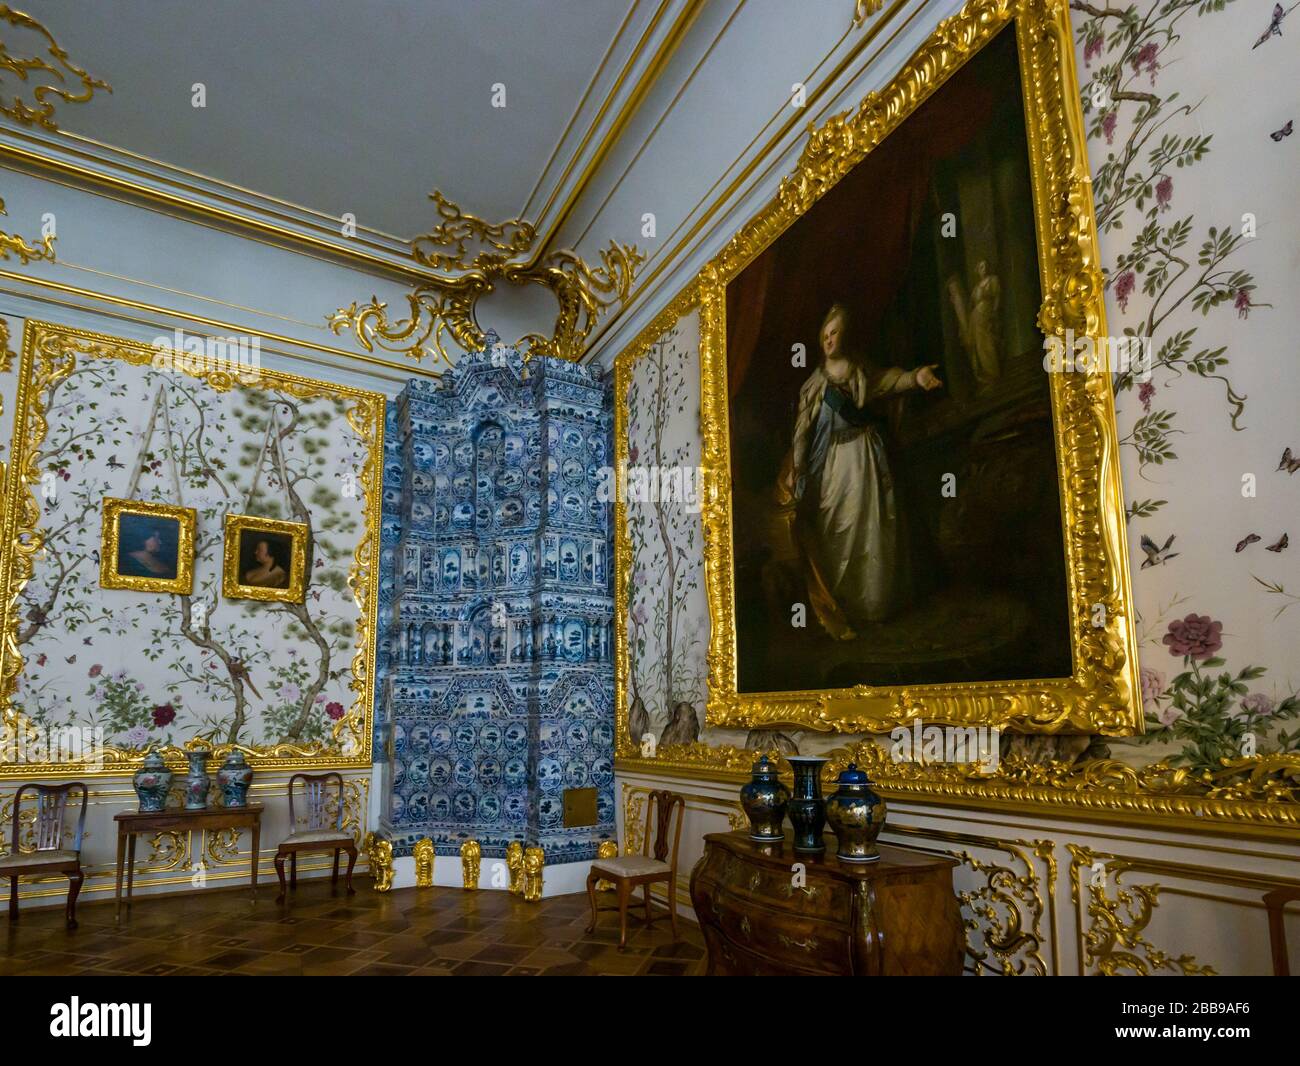 Ceramic heater and painting, Catherine Palace interior, Tsars Village, Pushkin, Tsarskoe Selo, Pushkin, Russian Federation Stock Photo